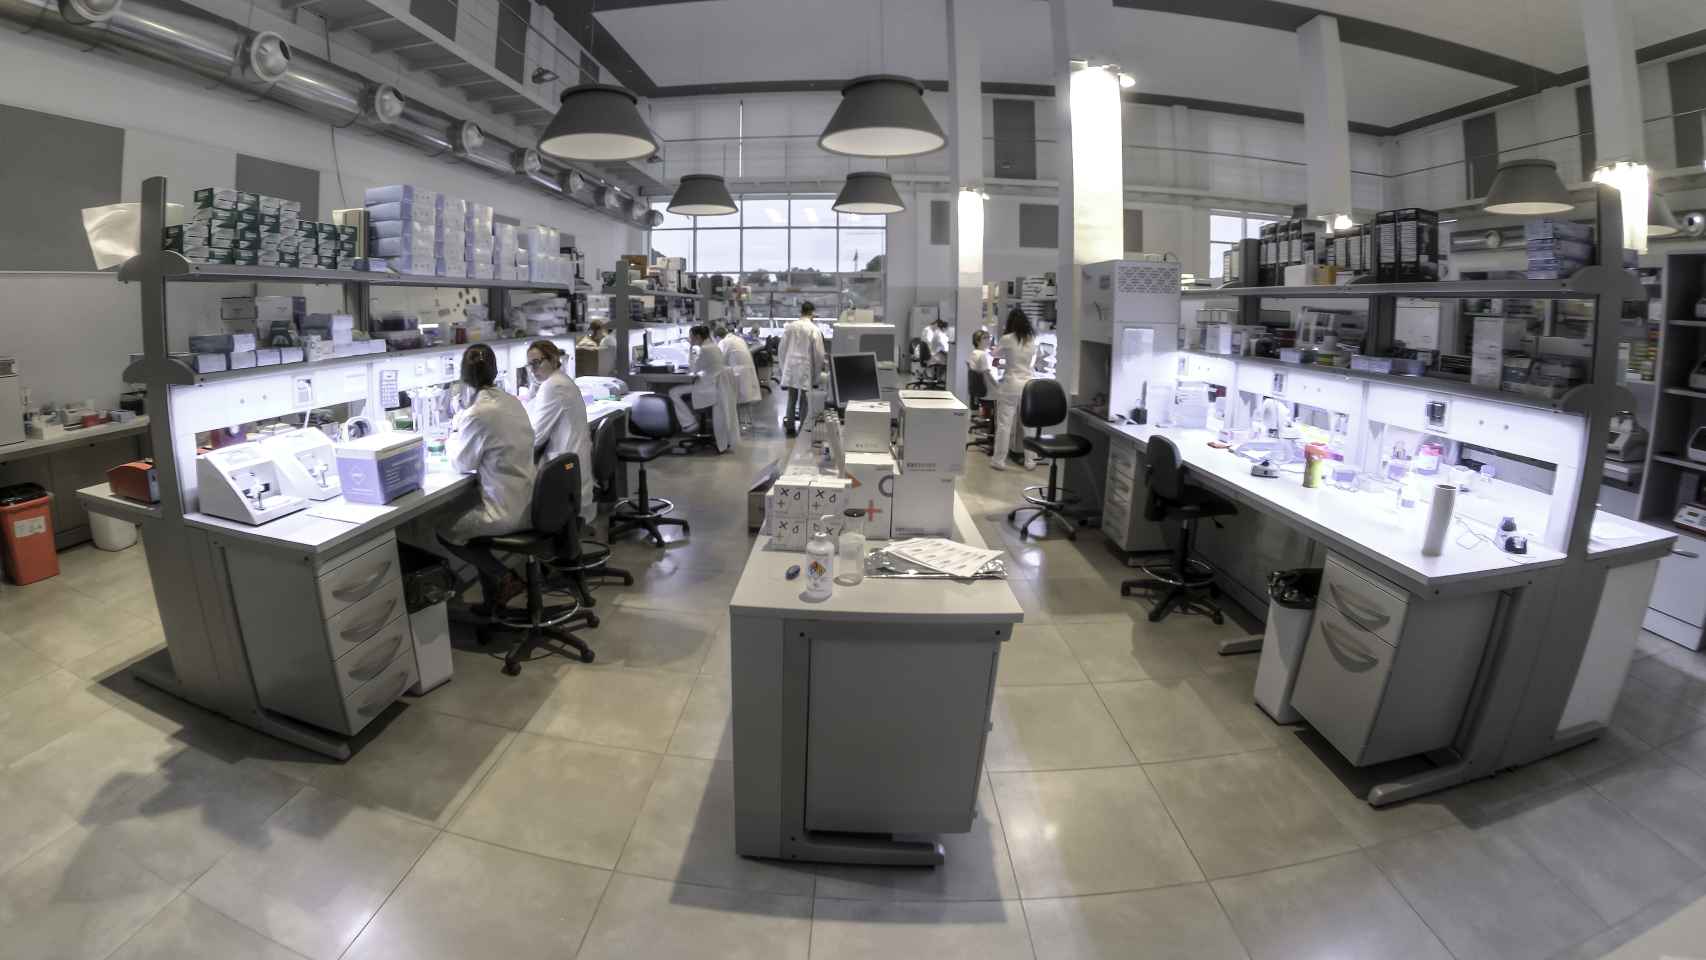 Laboratorio de Igenomix.